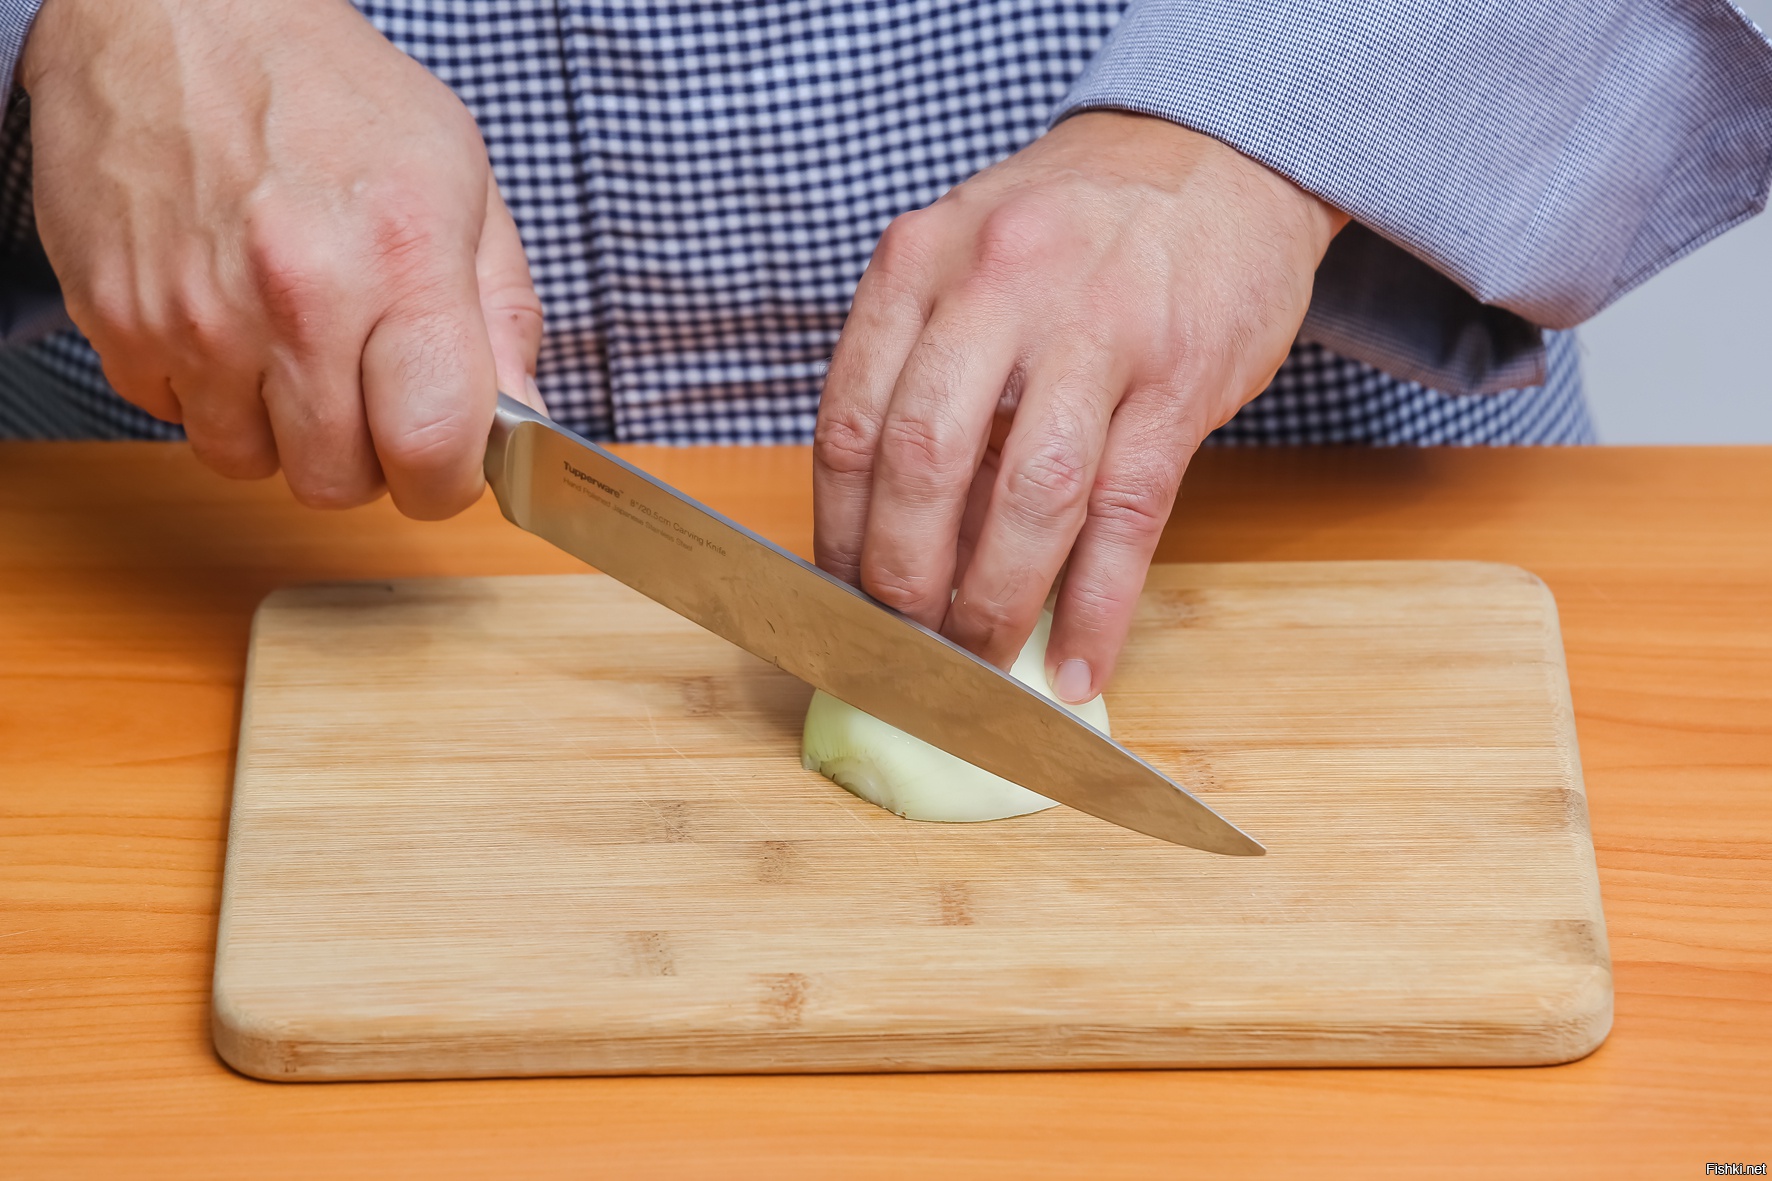 Нож режет овощи. Нож для нарезки овощей. Нож нарезает овощи. Доски для нарезки продуктов. Разделочная доска с ножом.